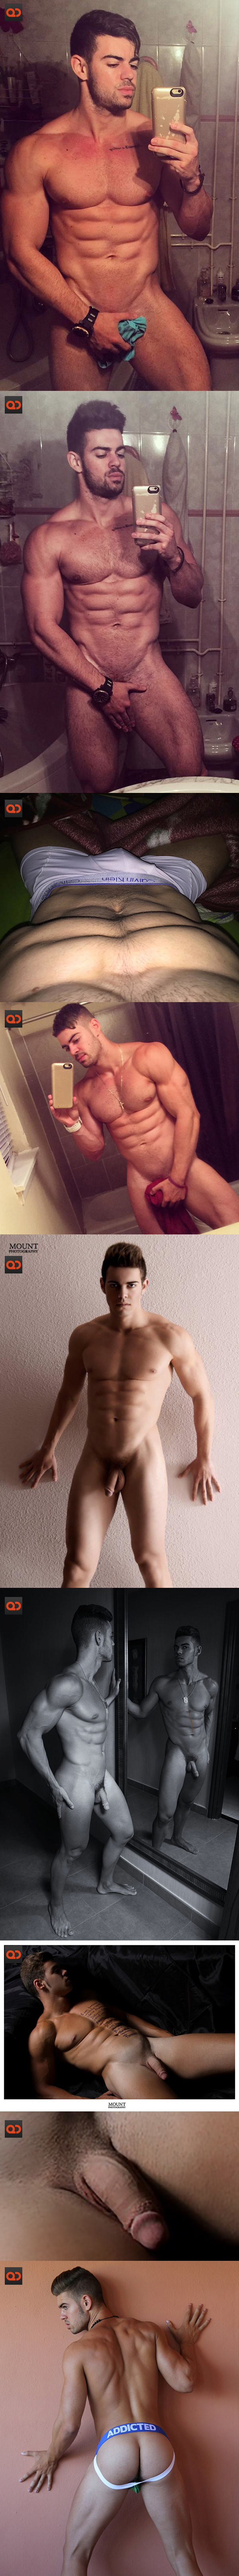 qc-fitness_model_cristian_romero_porn_past_revealed-collage03